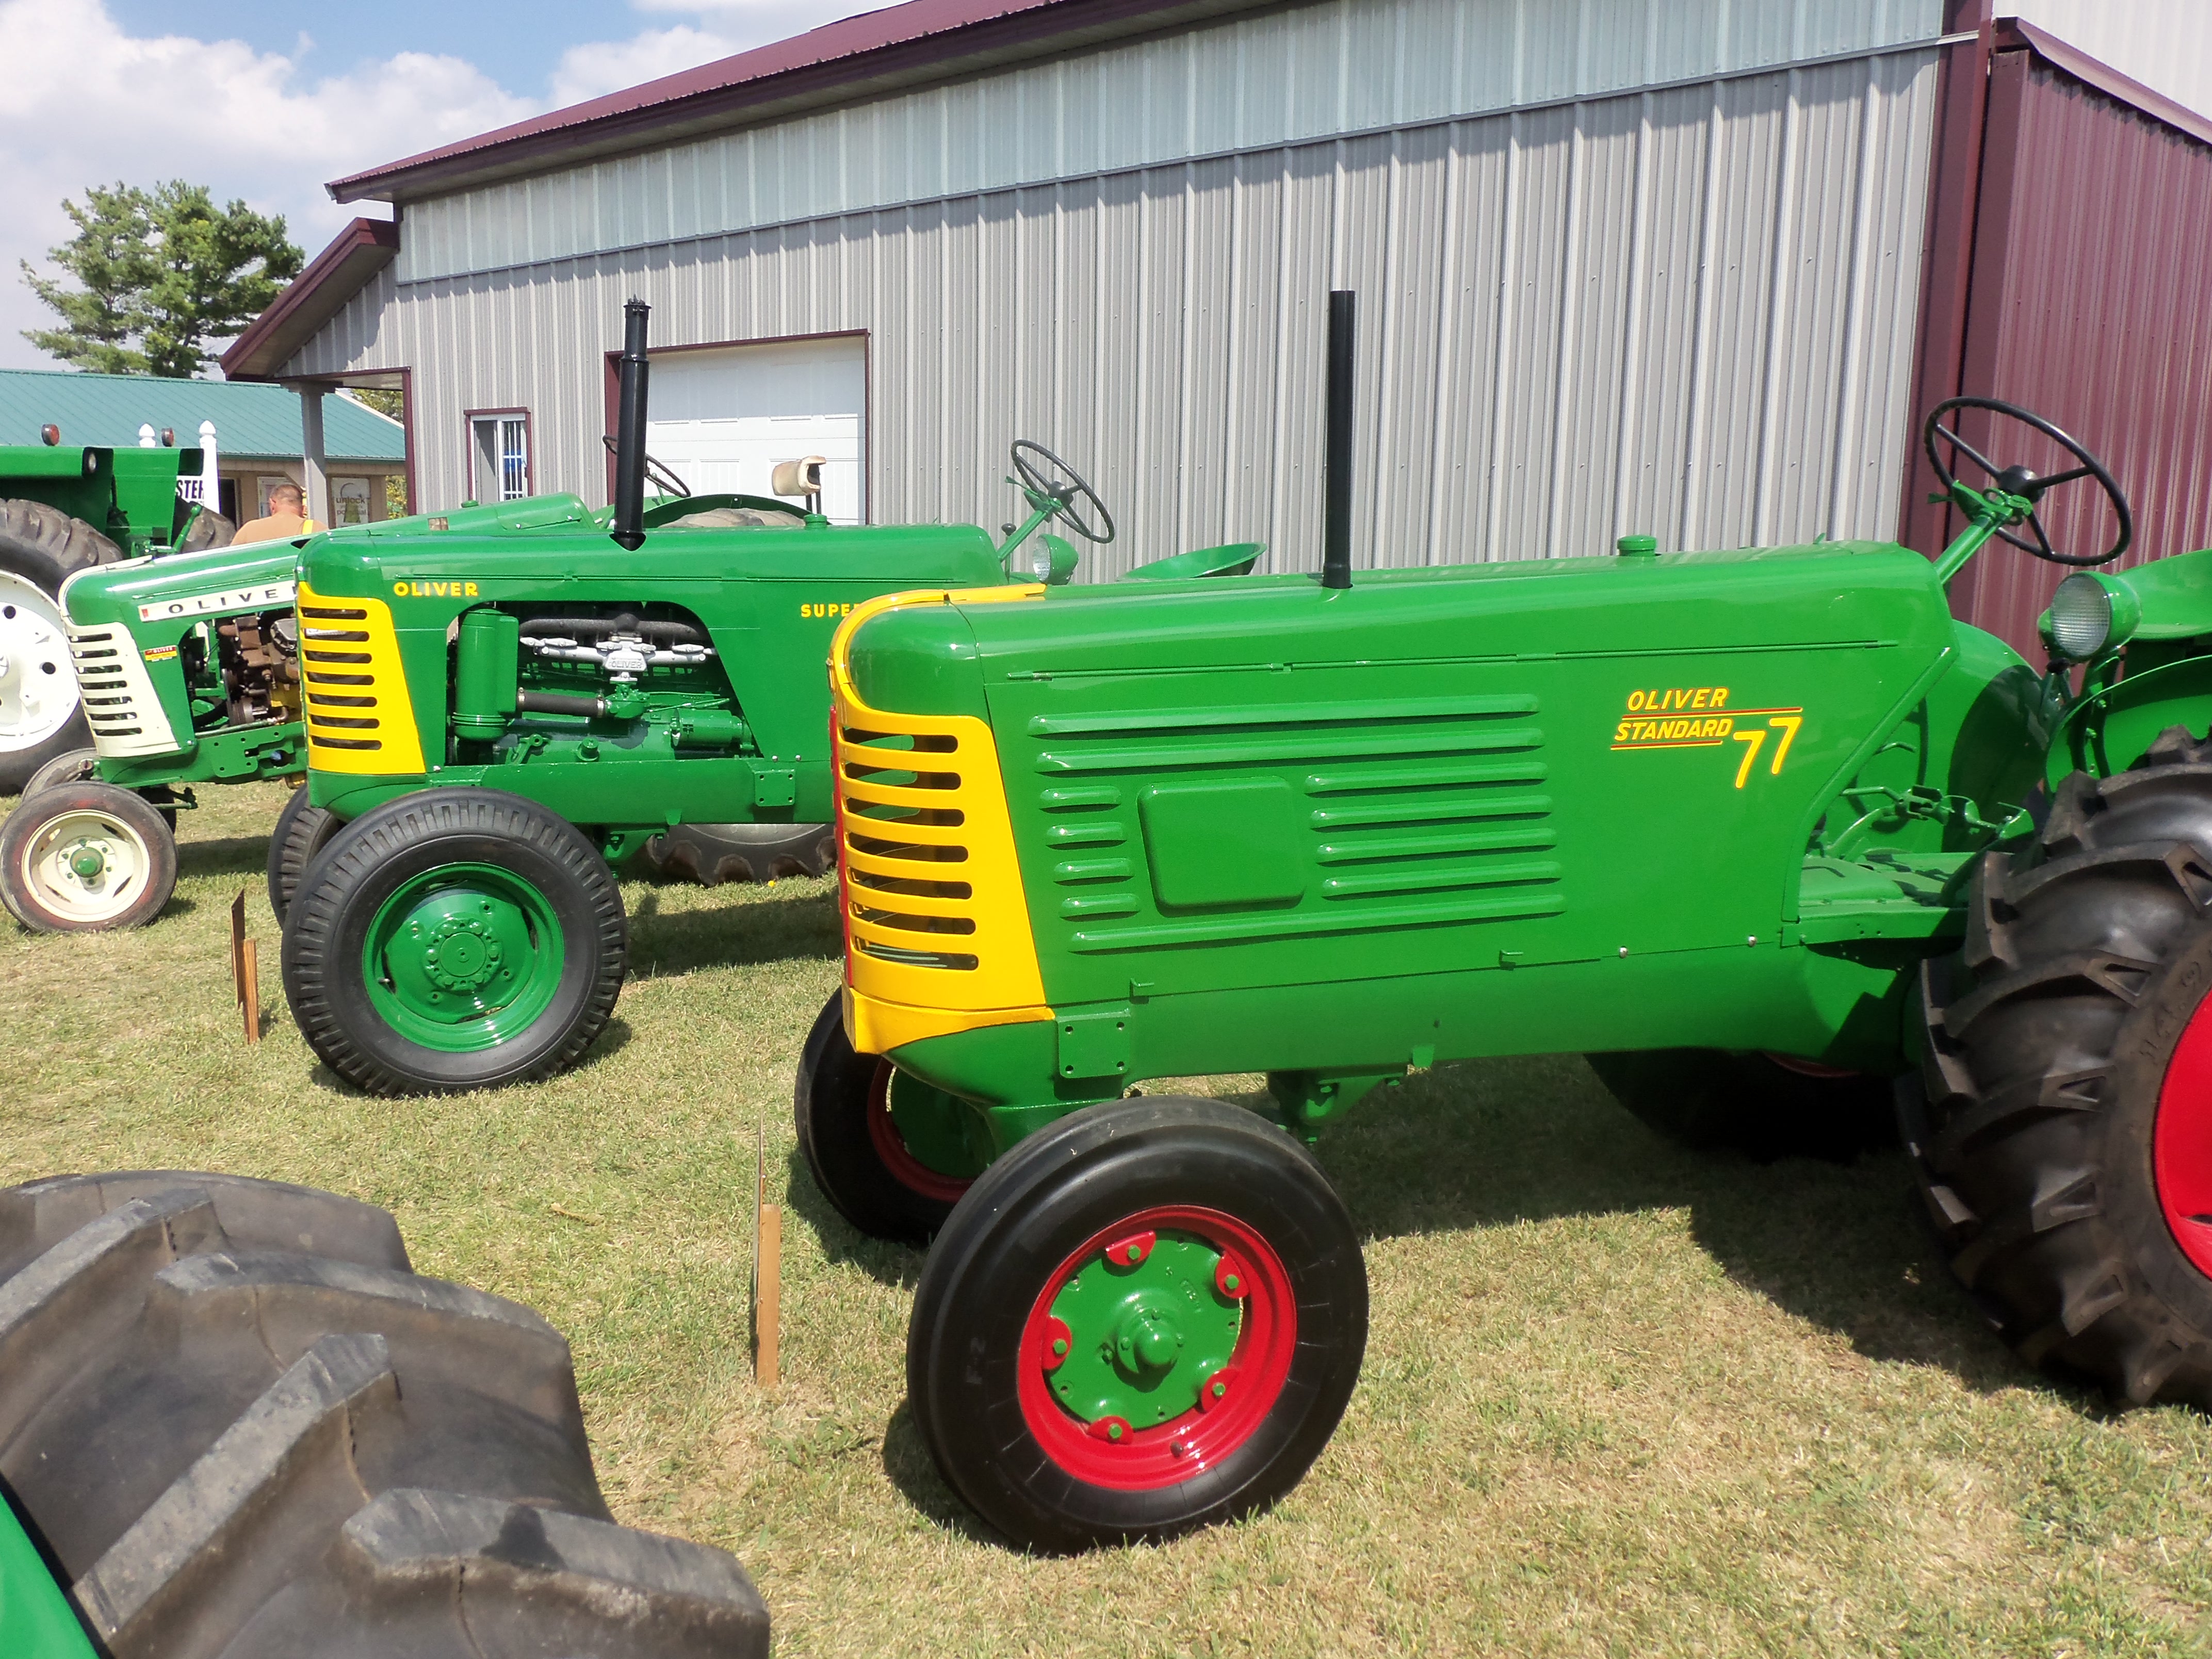 Oliver 77 & Super 77 | Oliver Tractors & Equipment | Pinterest